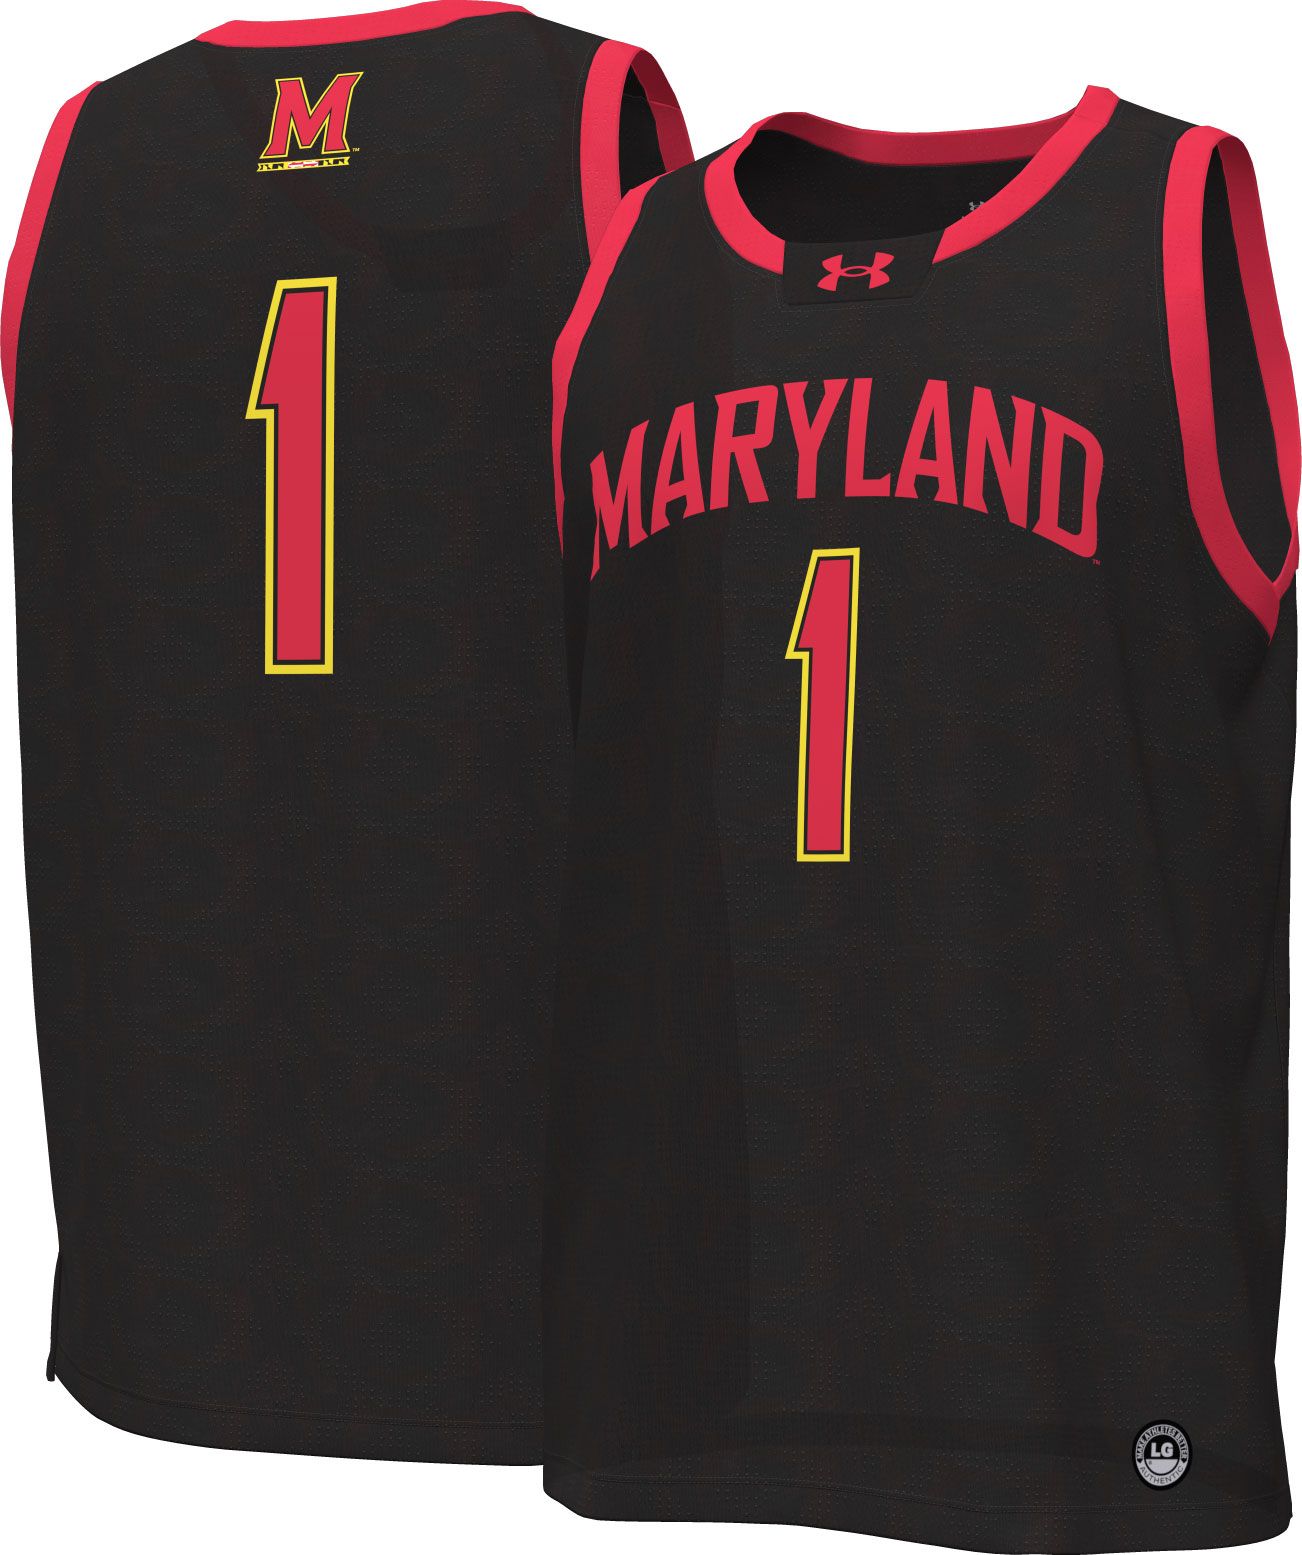 Maryland Terrapins starting lineup jersey